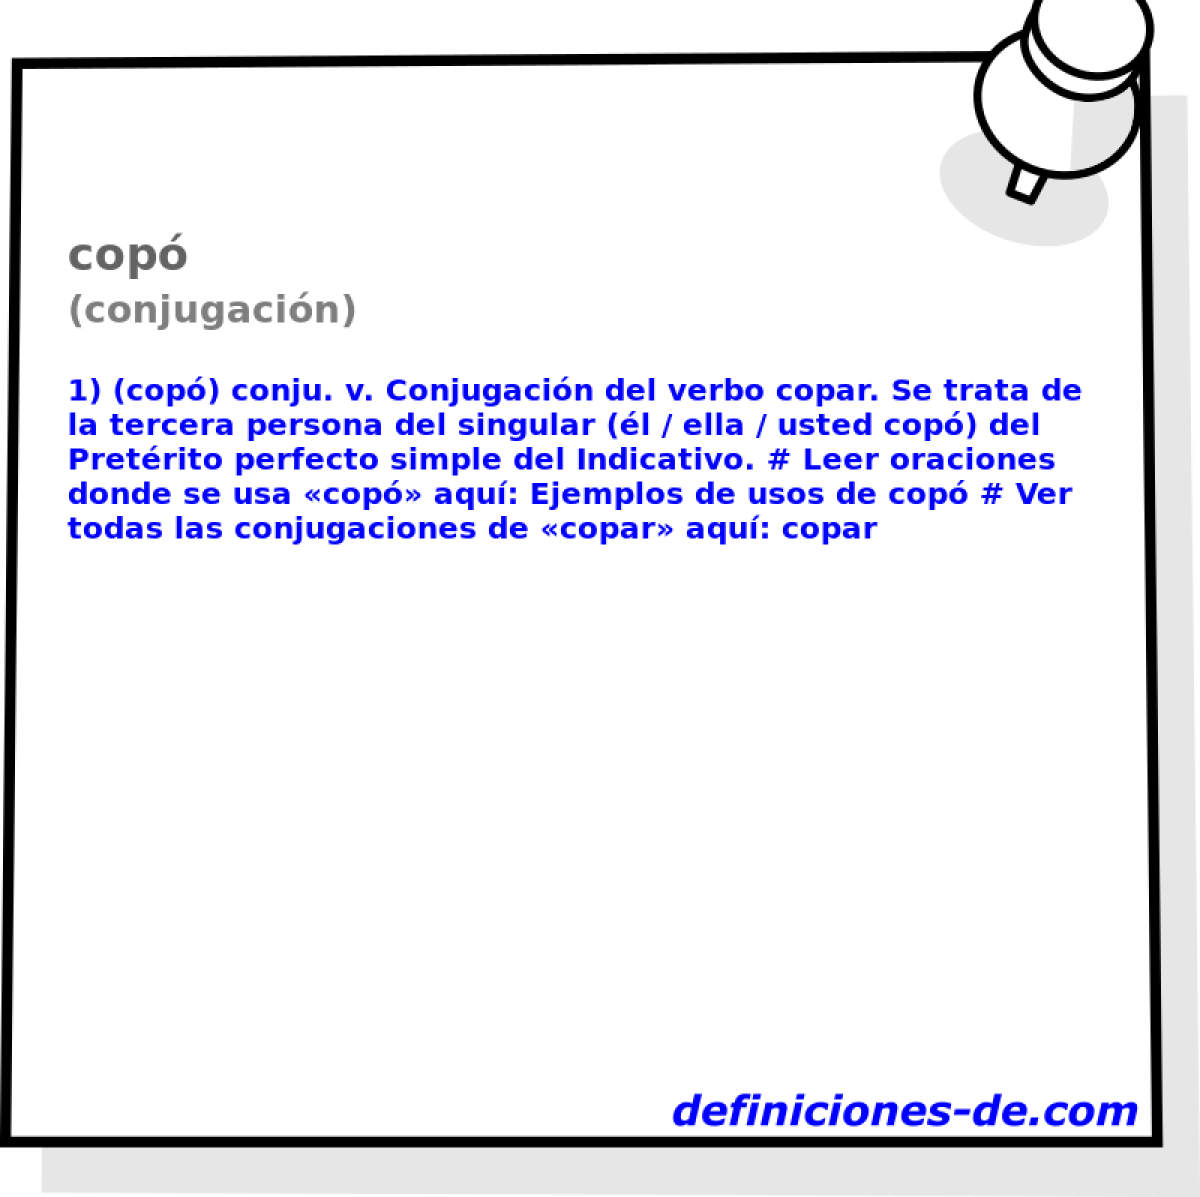 cop (conjugacin)